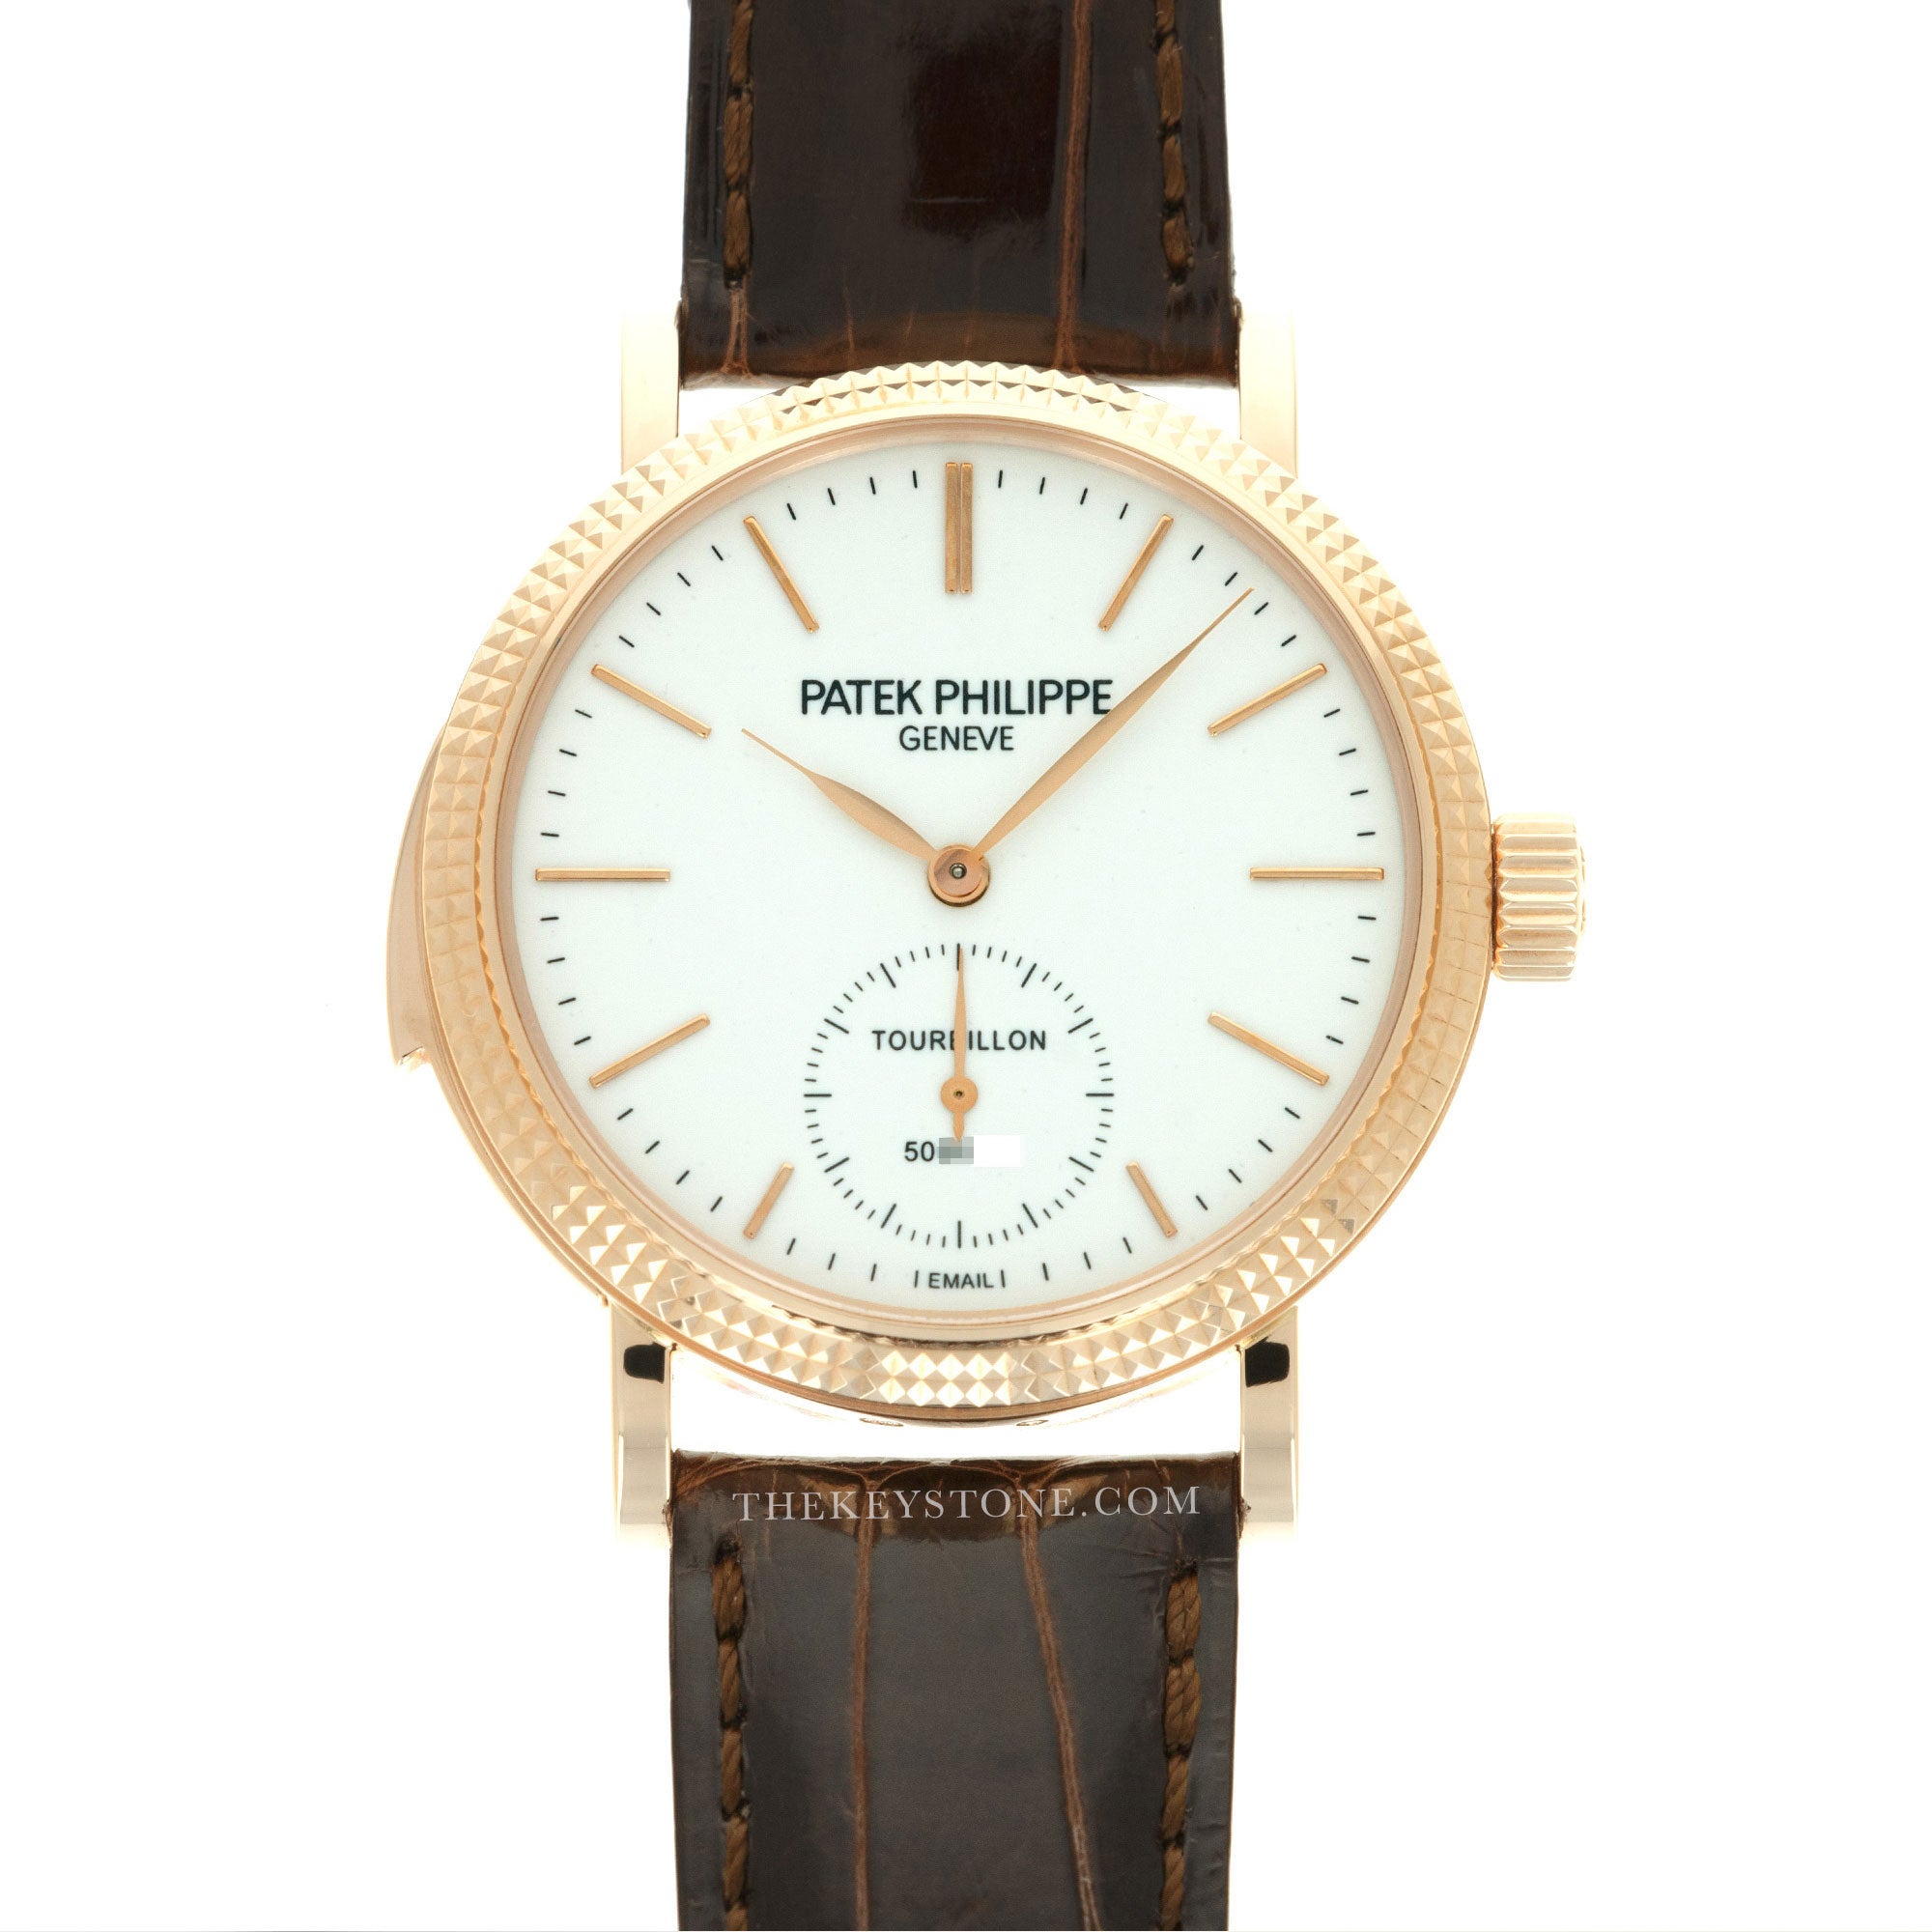 Patek Philippe - Patek Philippe Rose Gold Minute Repeater Tourbillon Ref. 5339R - The Keystone Watches